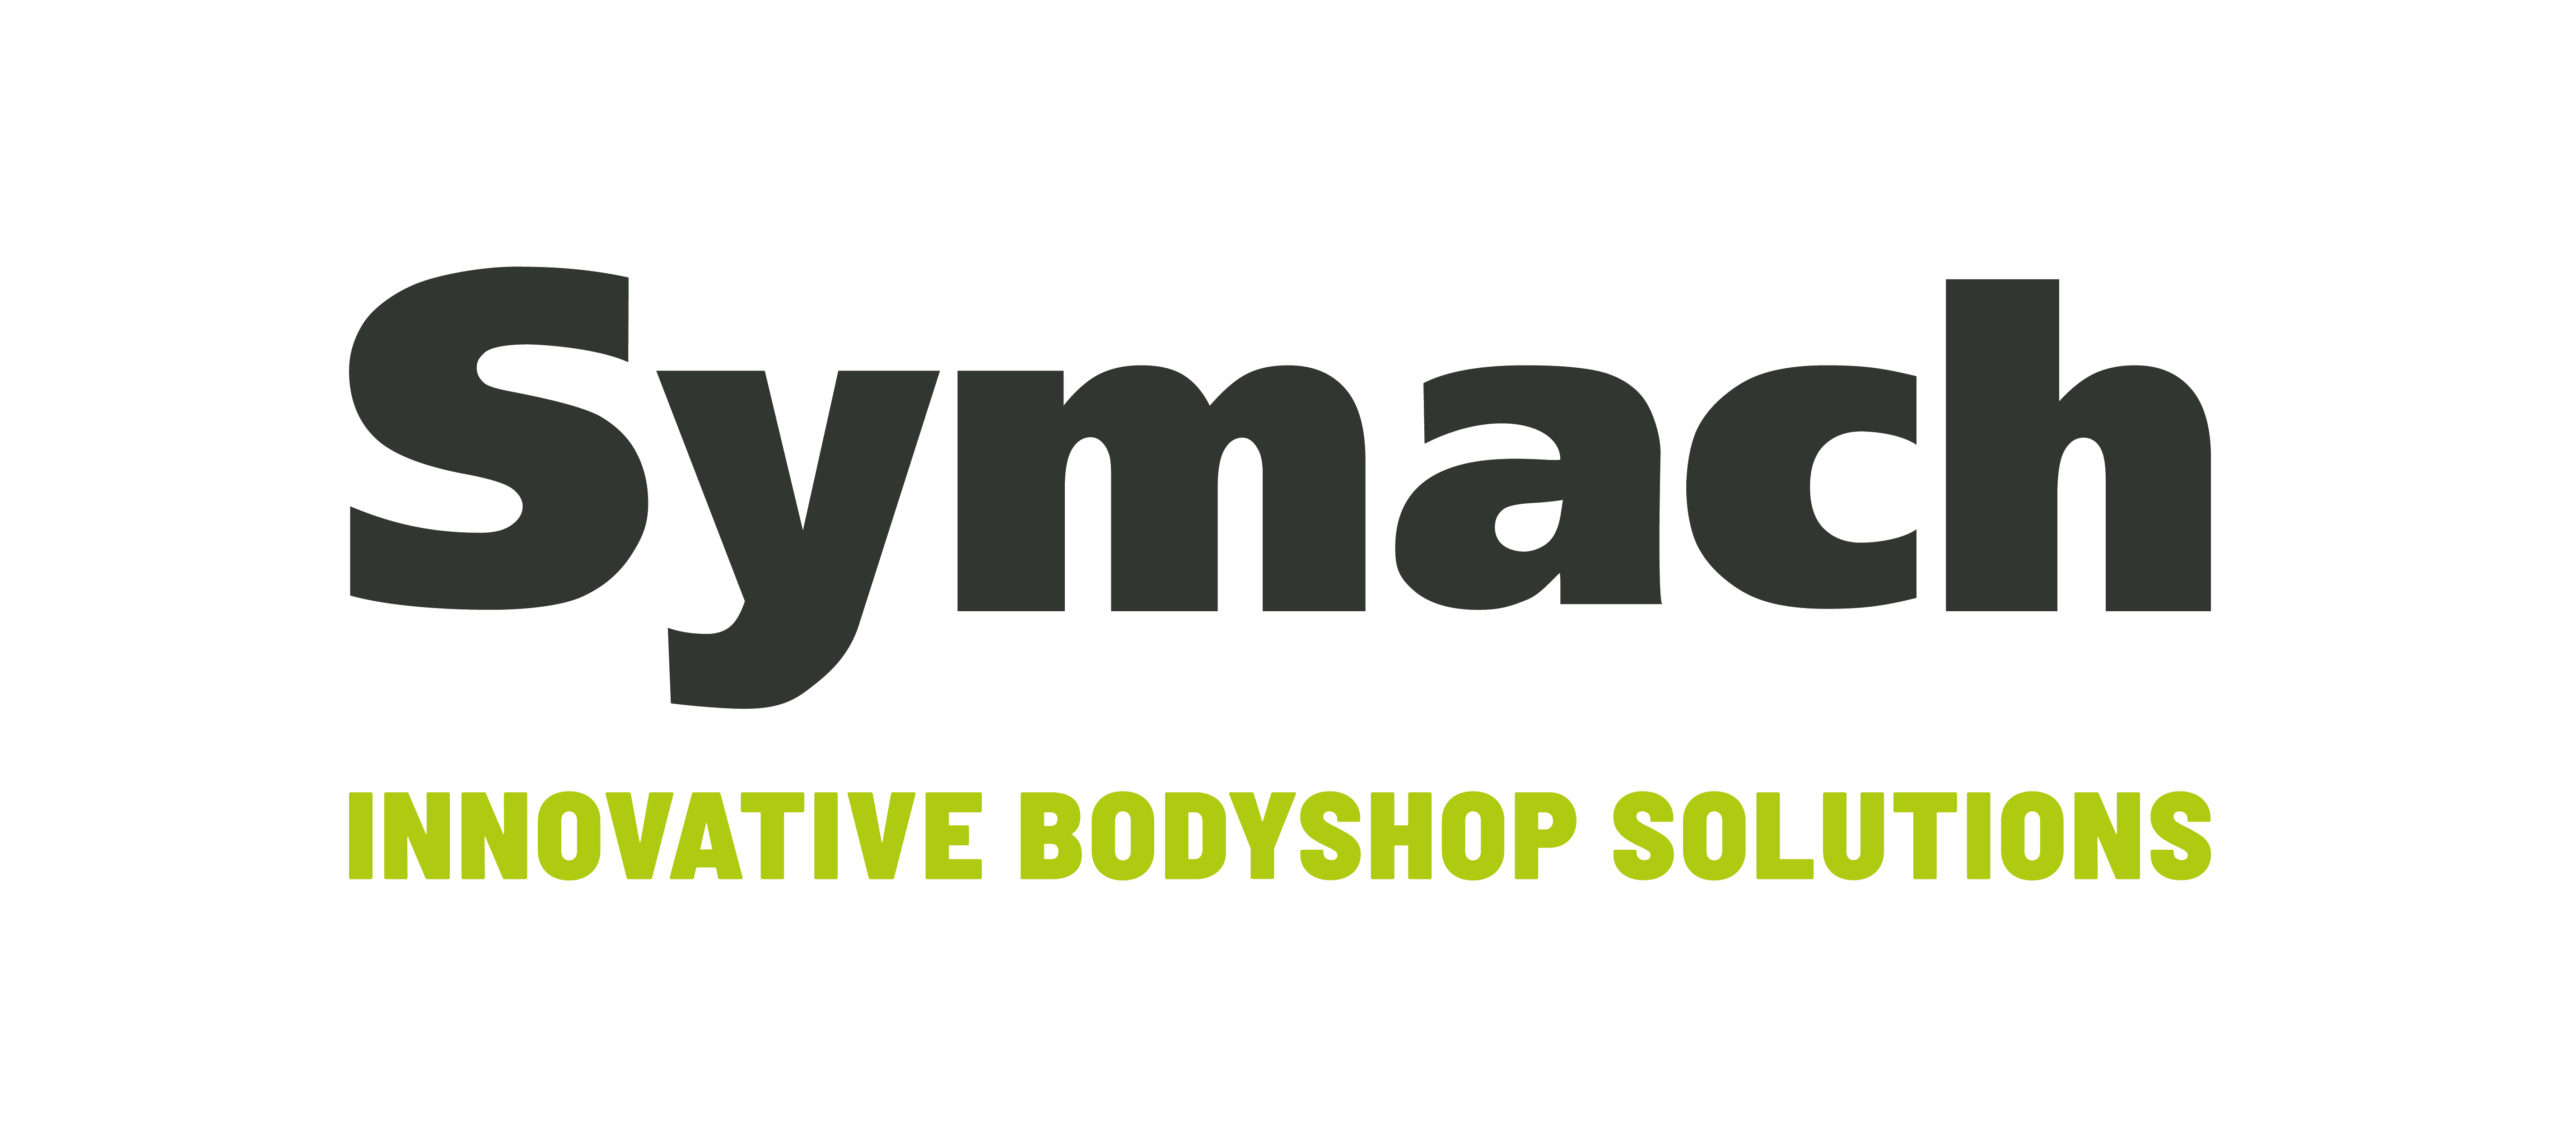 Symach Innovative Bodyshop Solutions from DealerShop USA